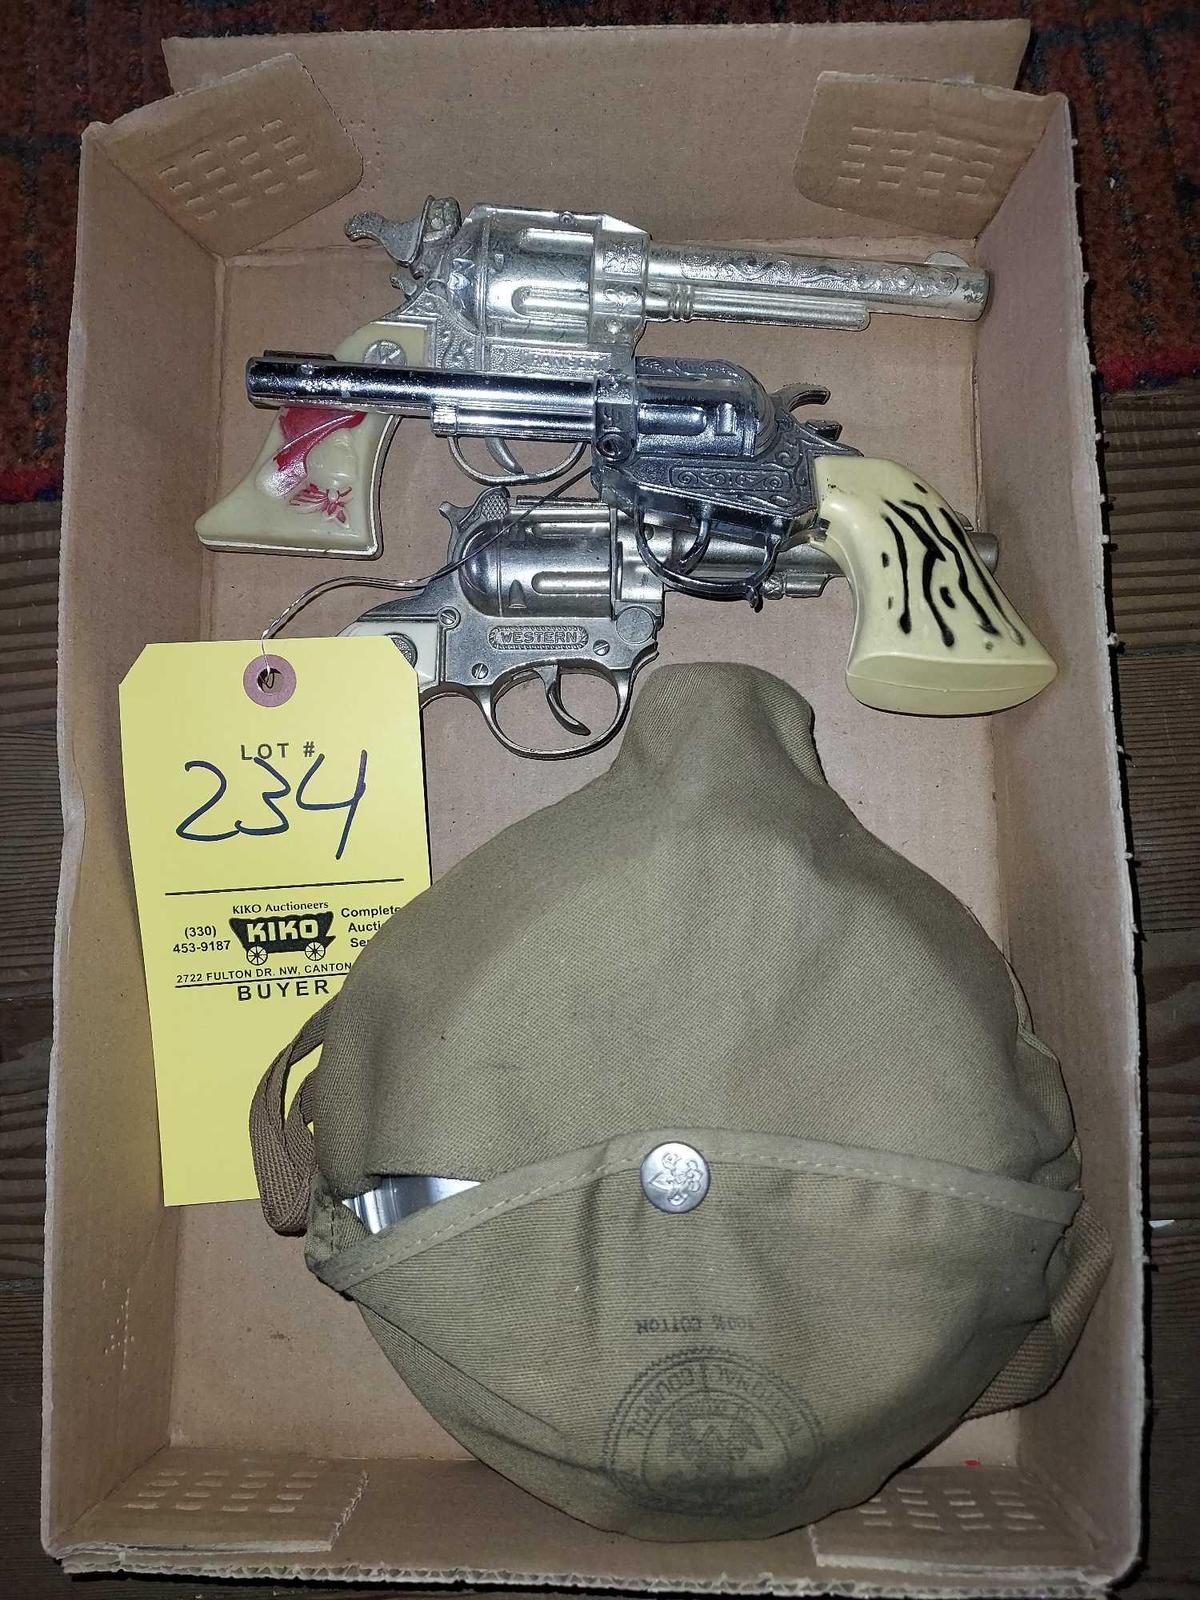 Vintage Cap Guns & BSA Mess Kit